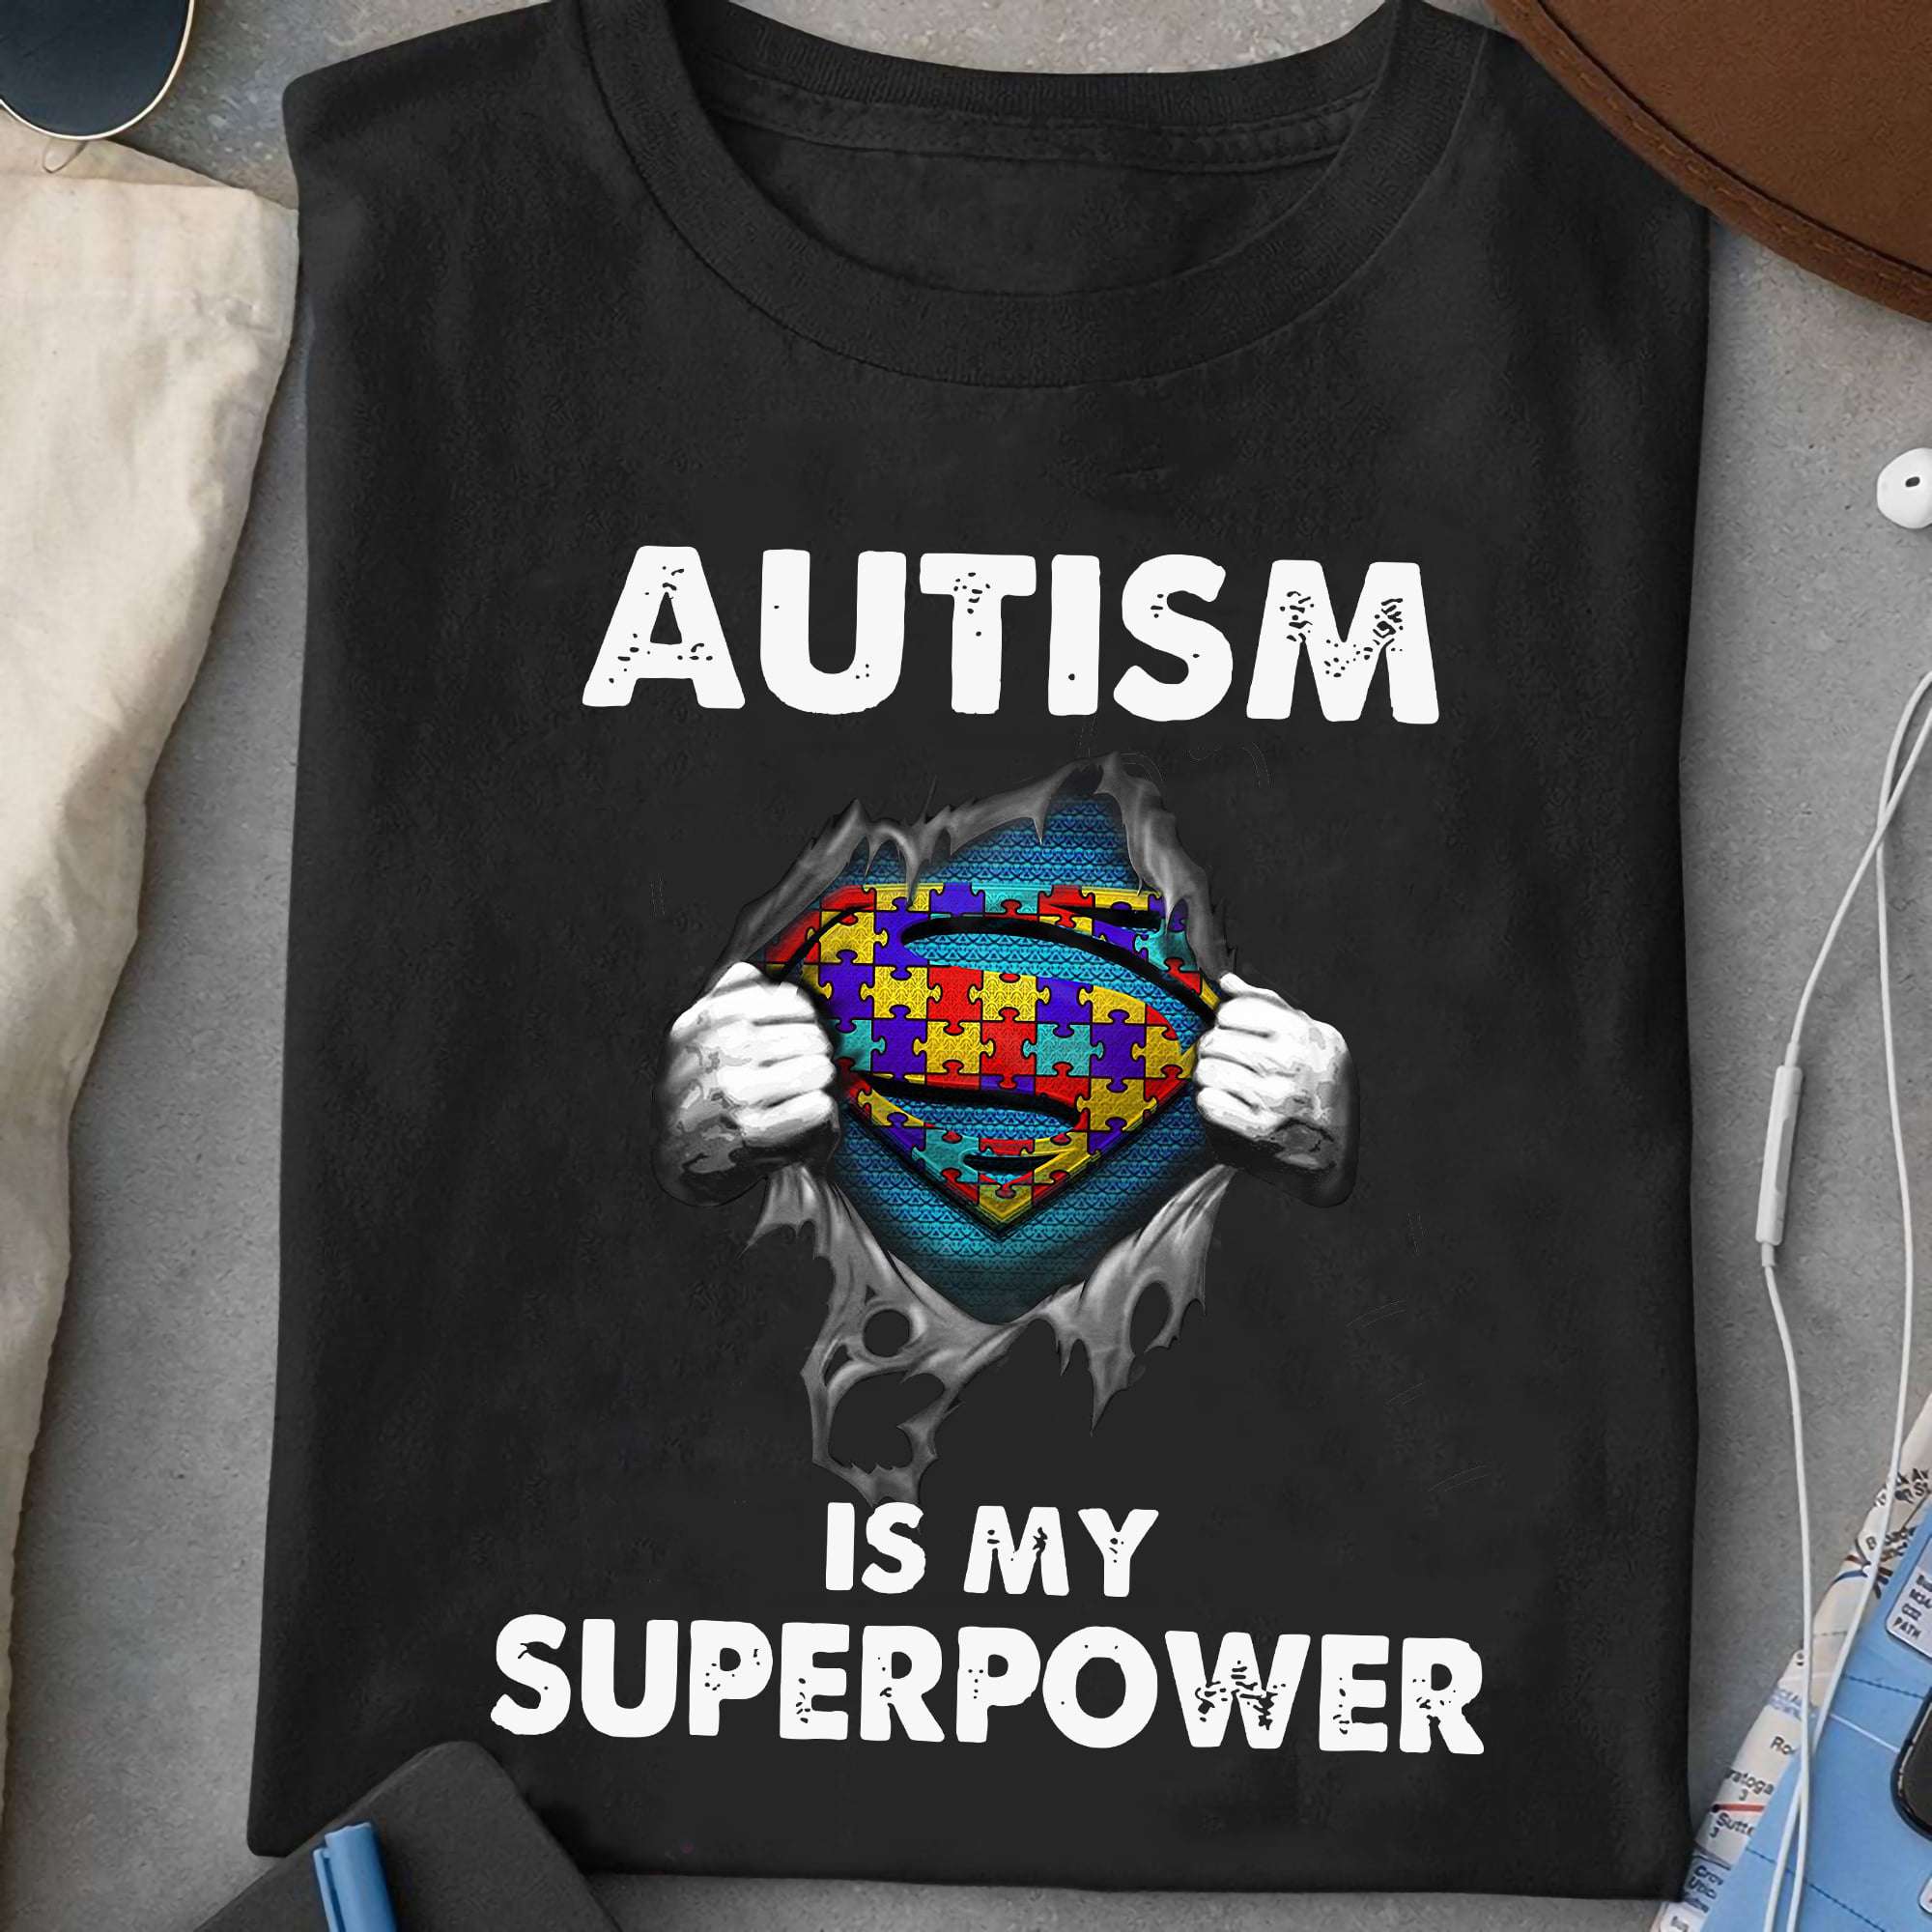 Autism Awareness - Autism is my superpower